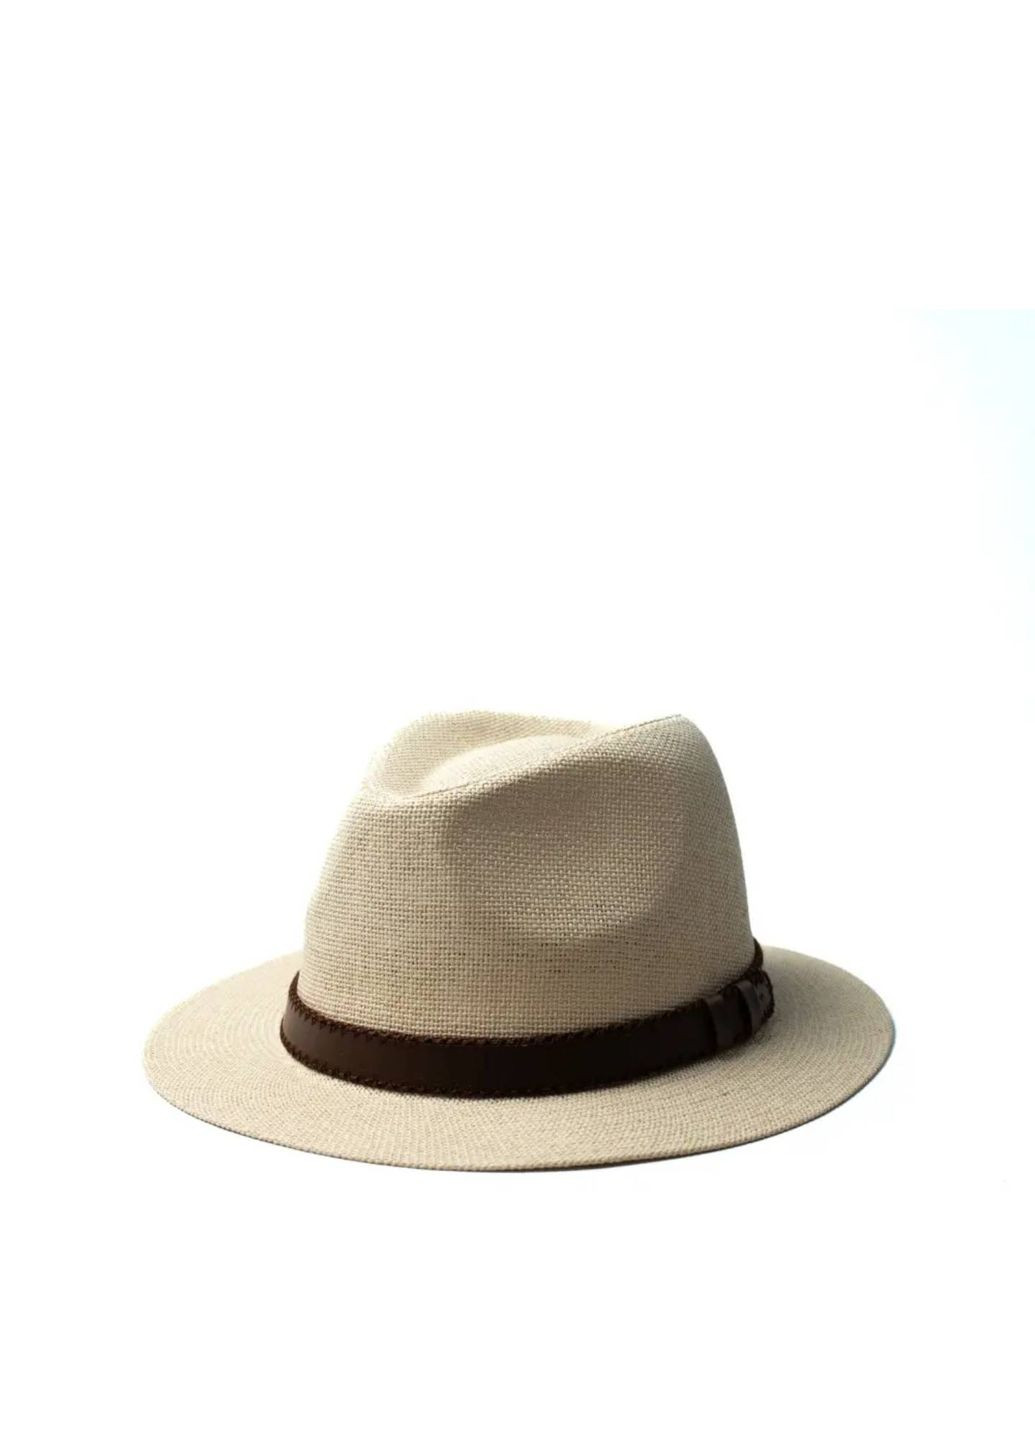 Шляпа федора женская бумага бежевая BATTY LuckyLOOK 817-679 (292668974)